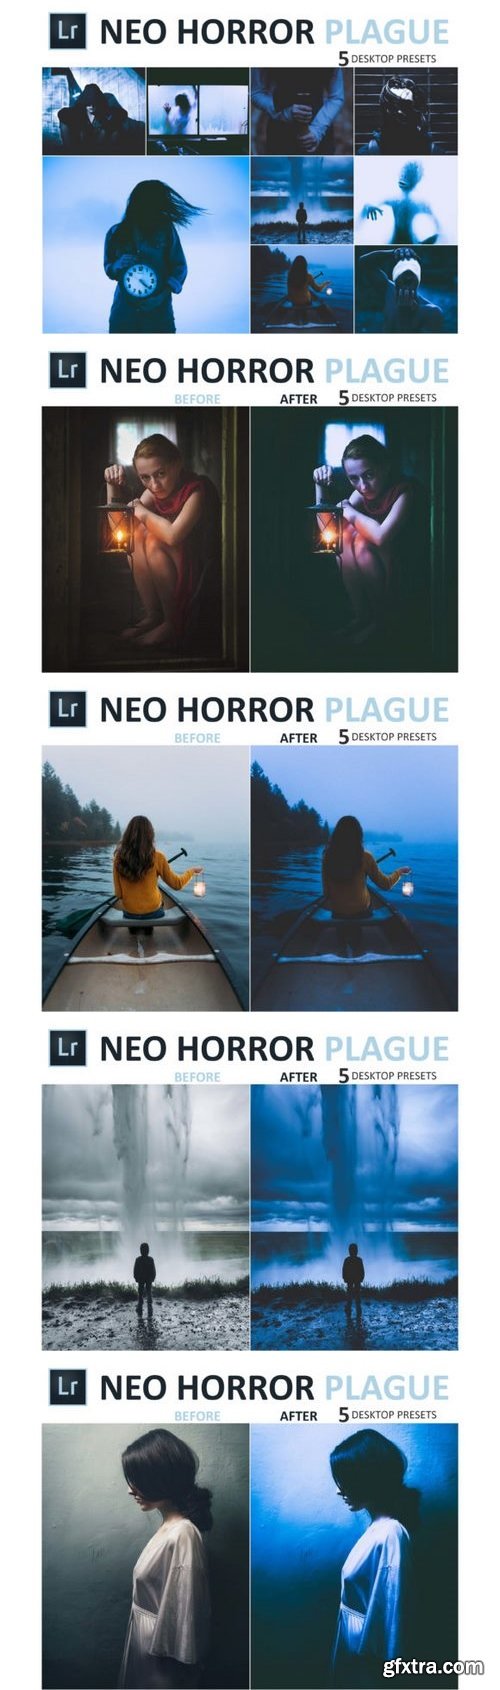 Thehungryjpeg - Neo Horror Plague Desktop Lightroom Presets 3524776